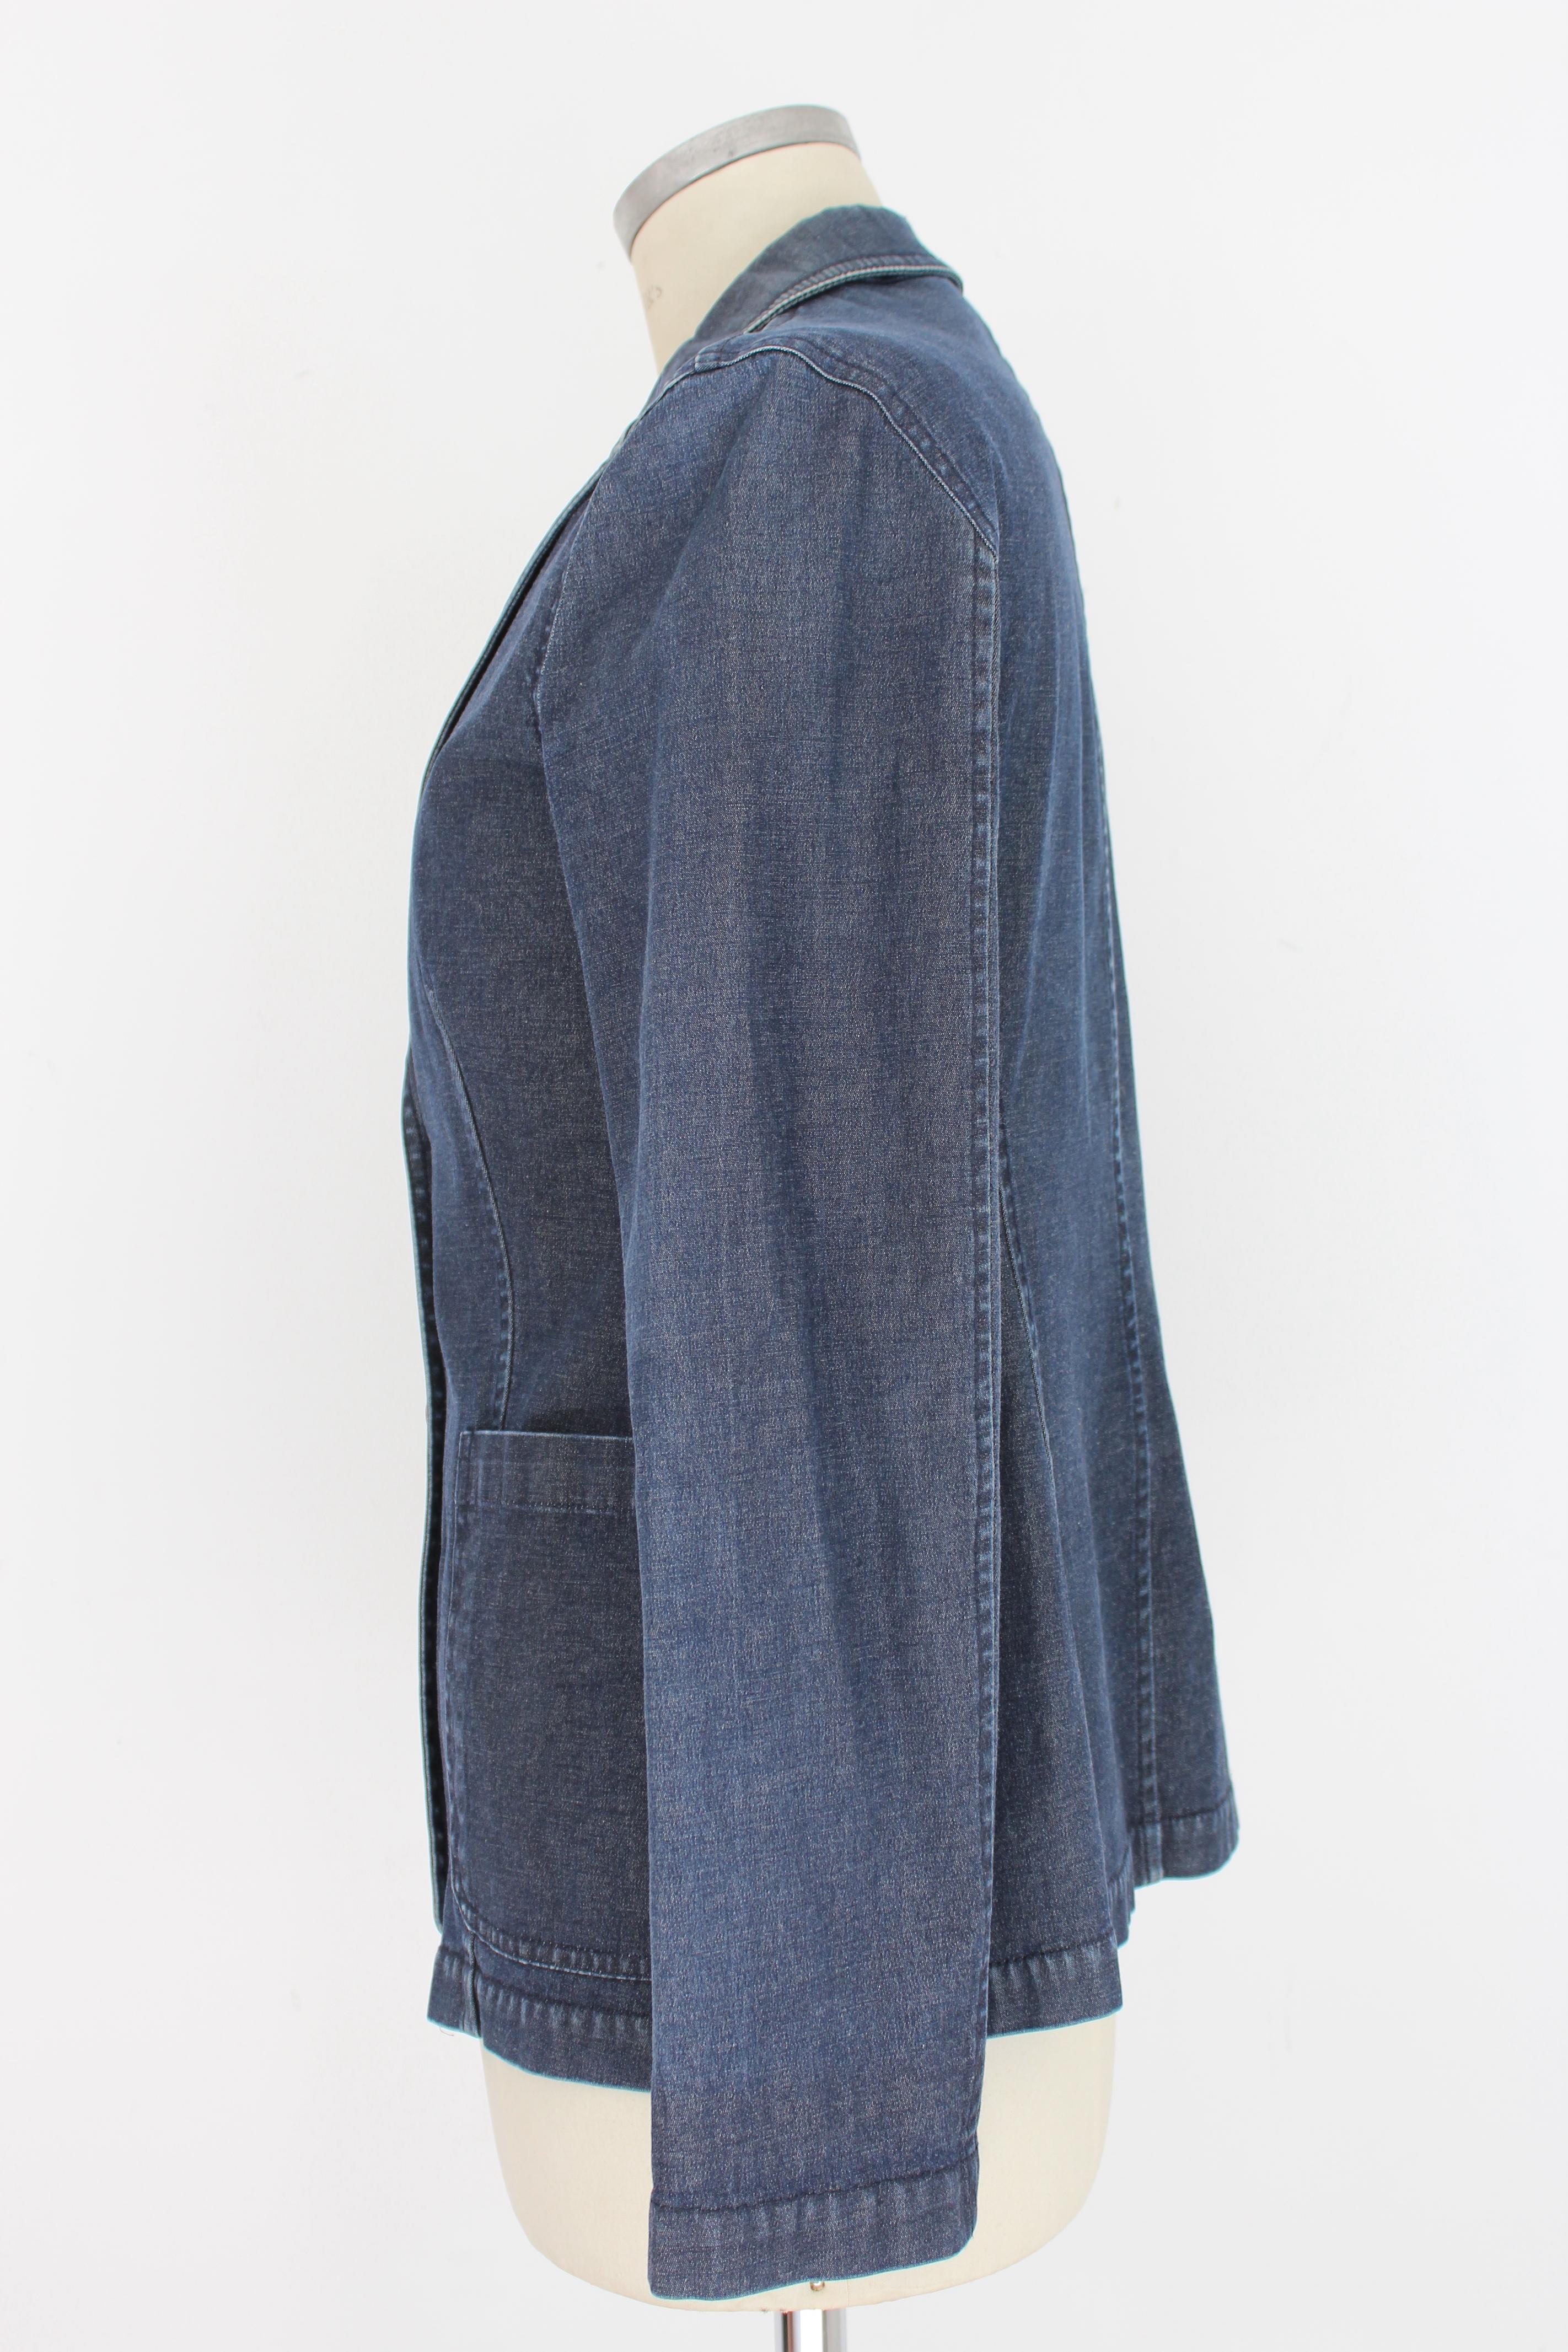 moschino jean jacket